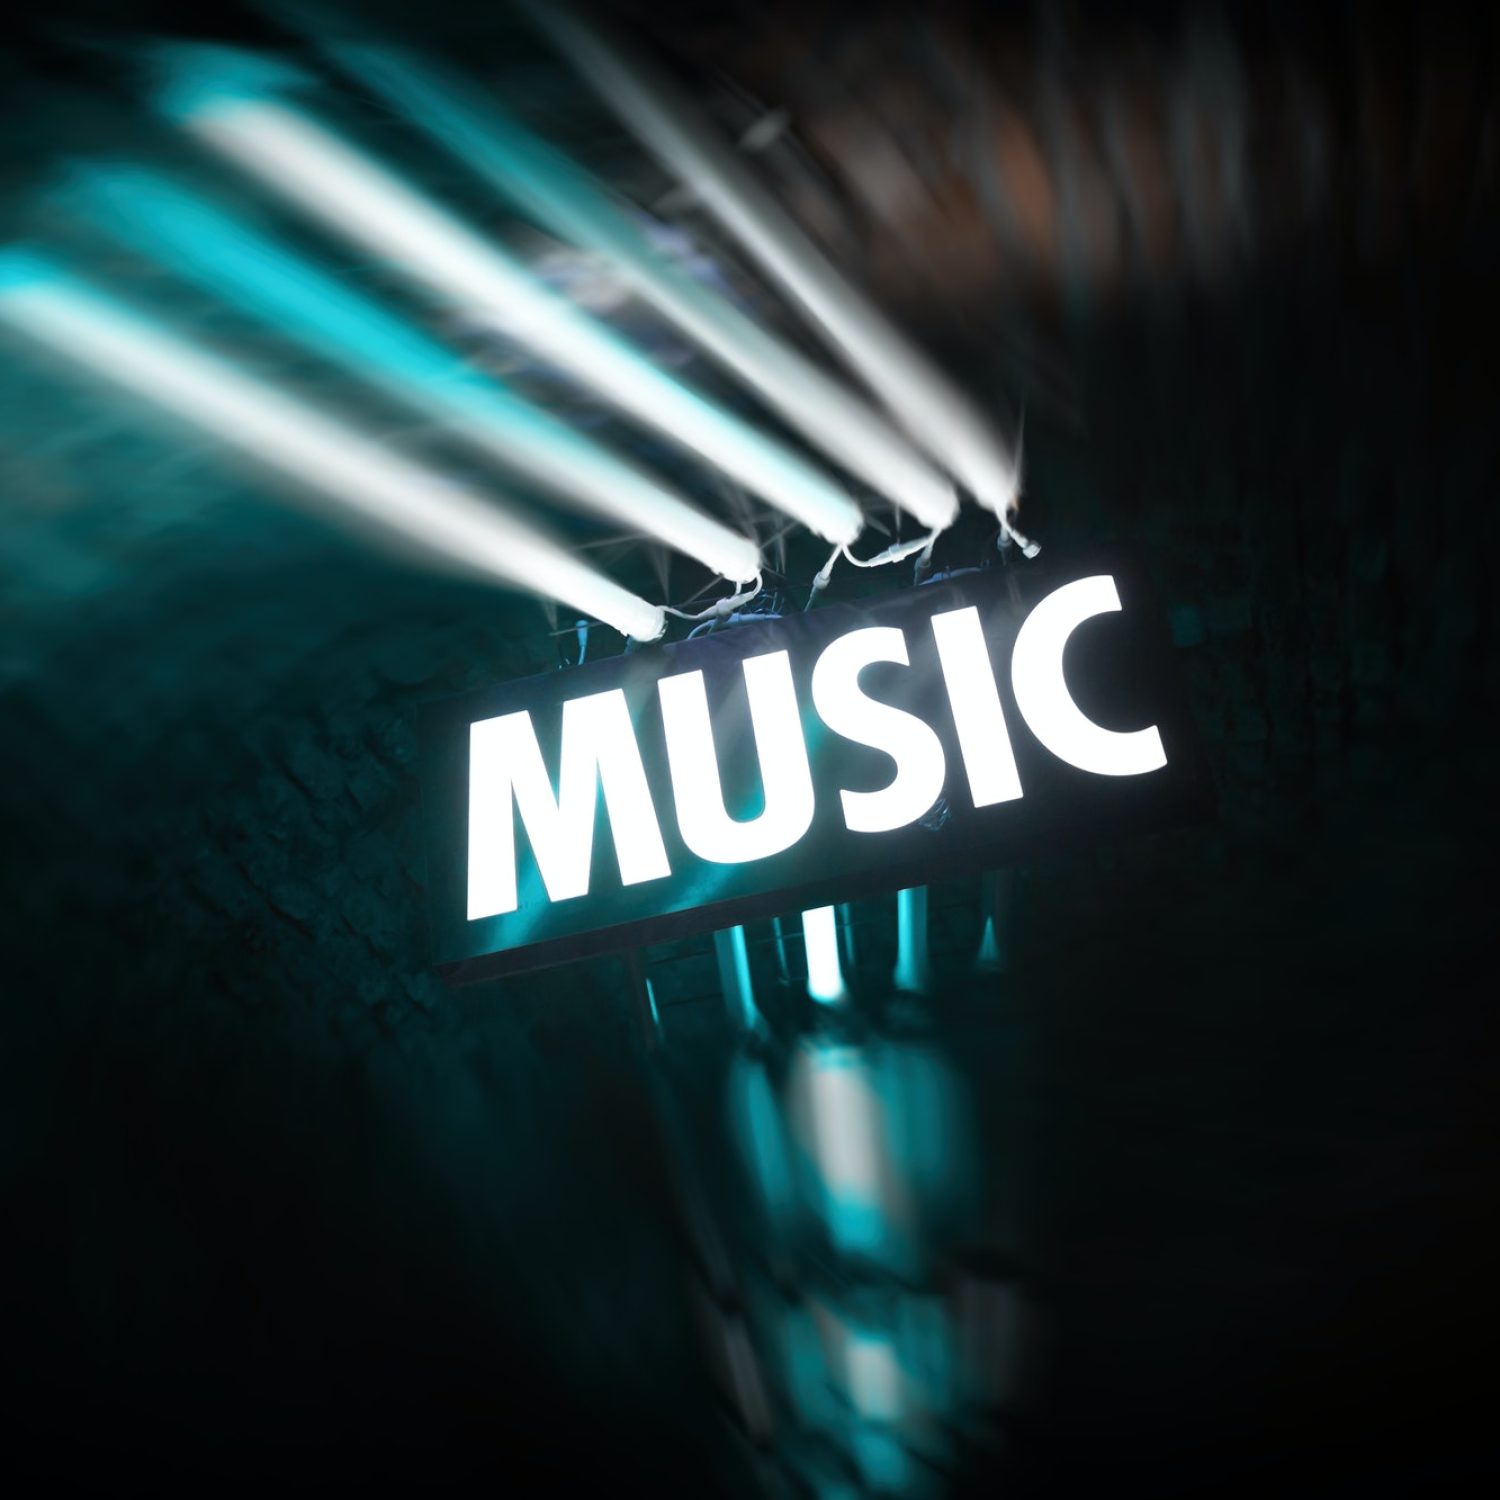 Music concept image